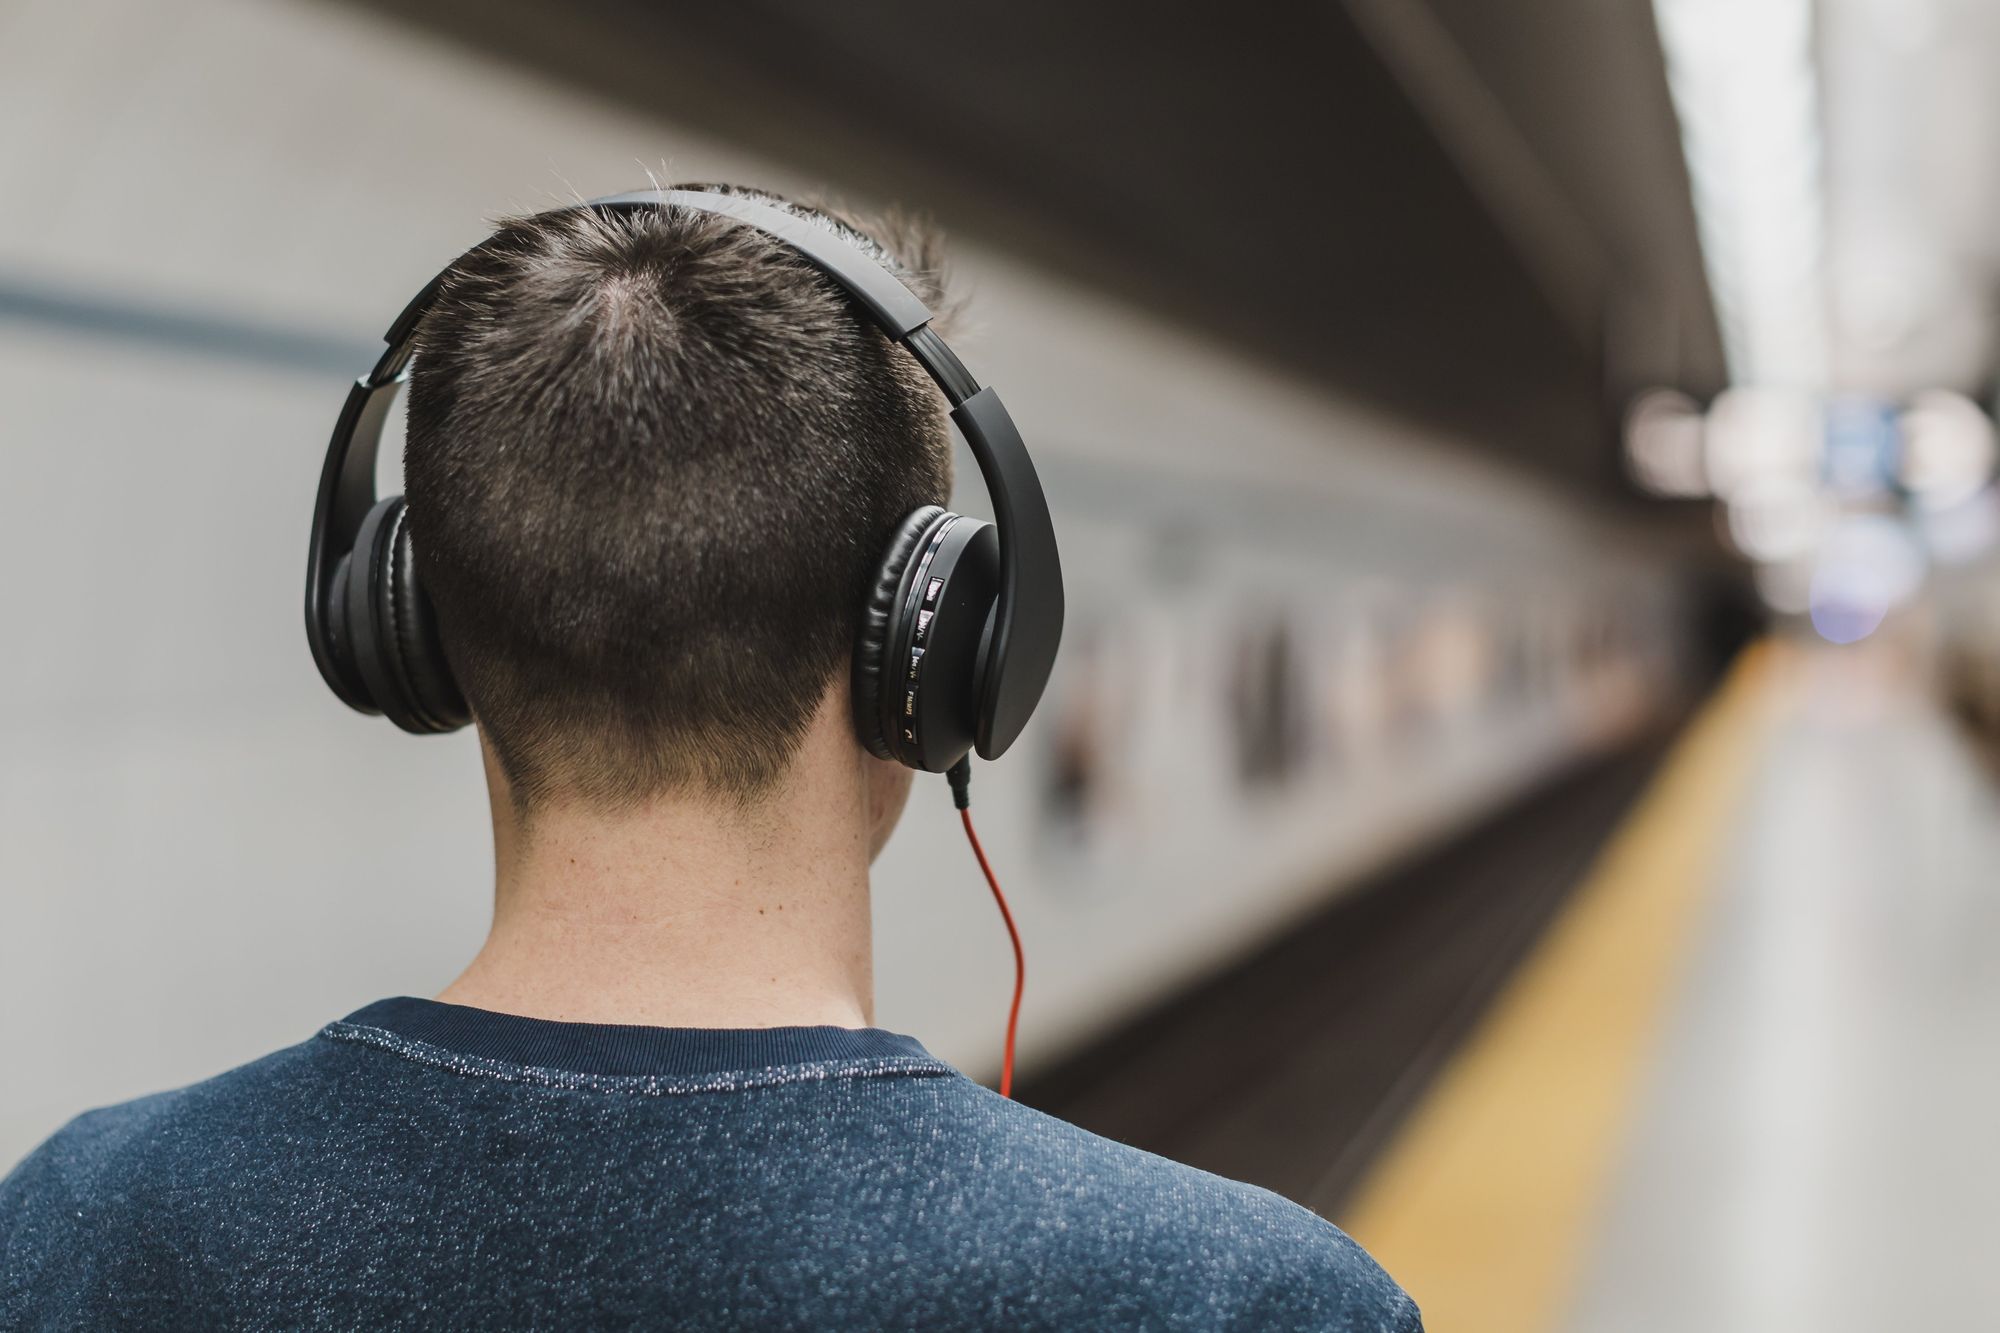 Listen to podcasts/audio books